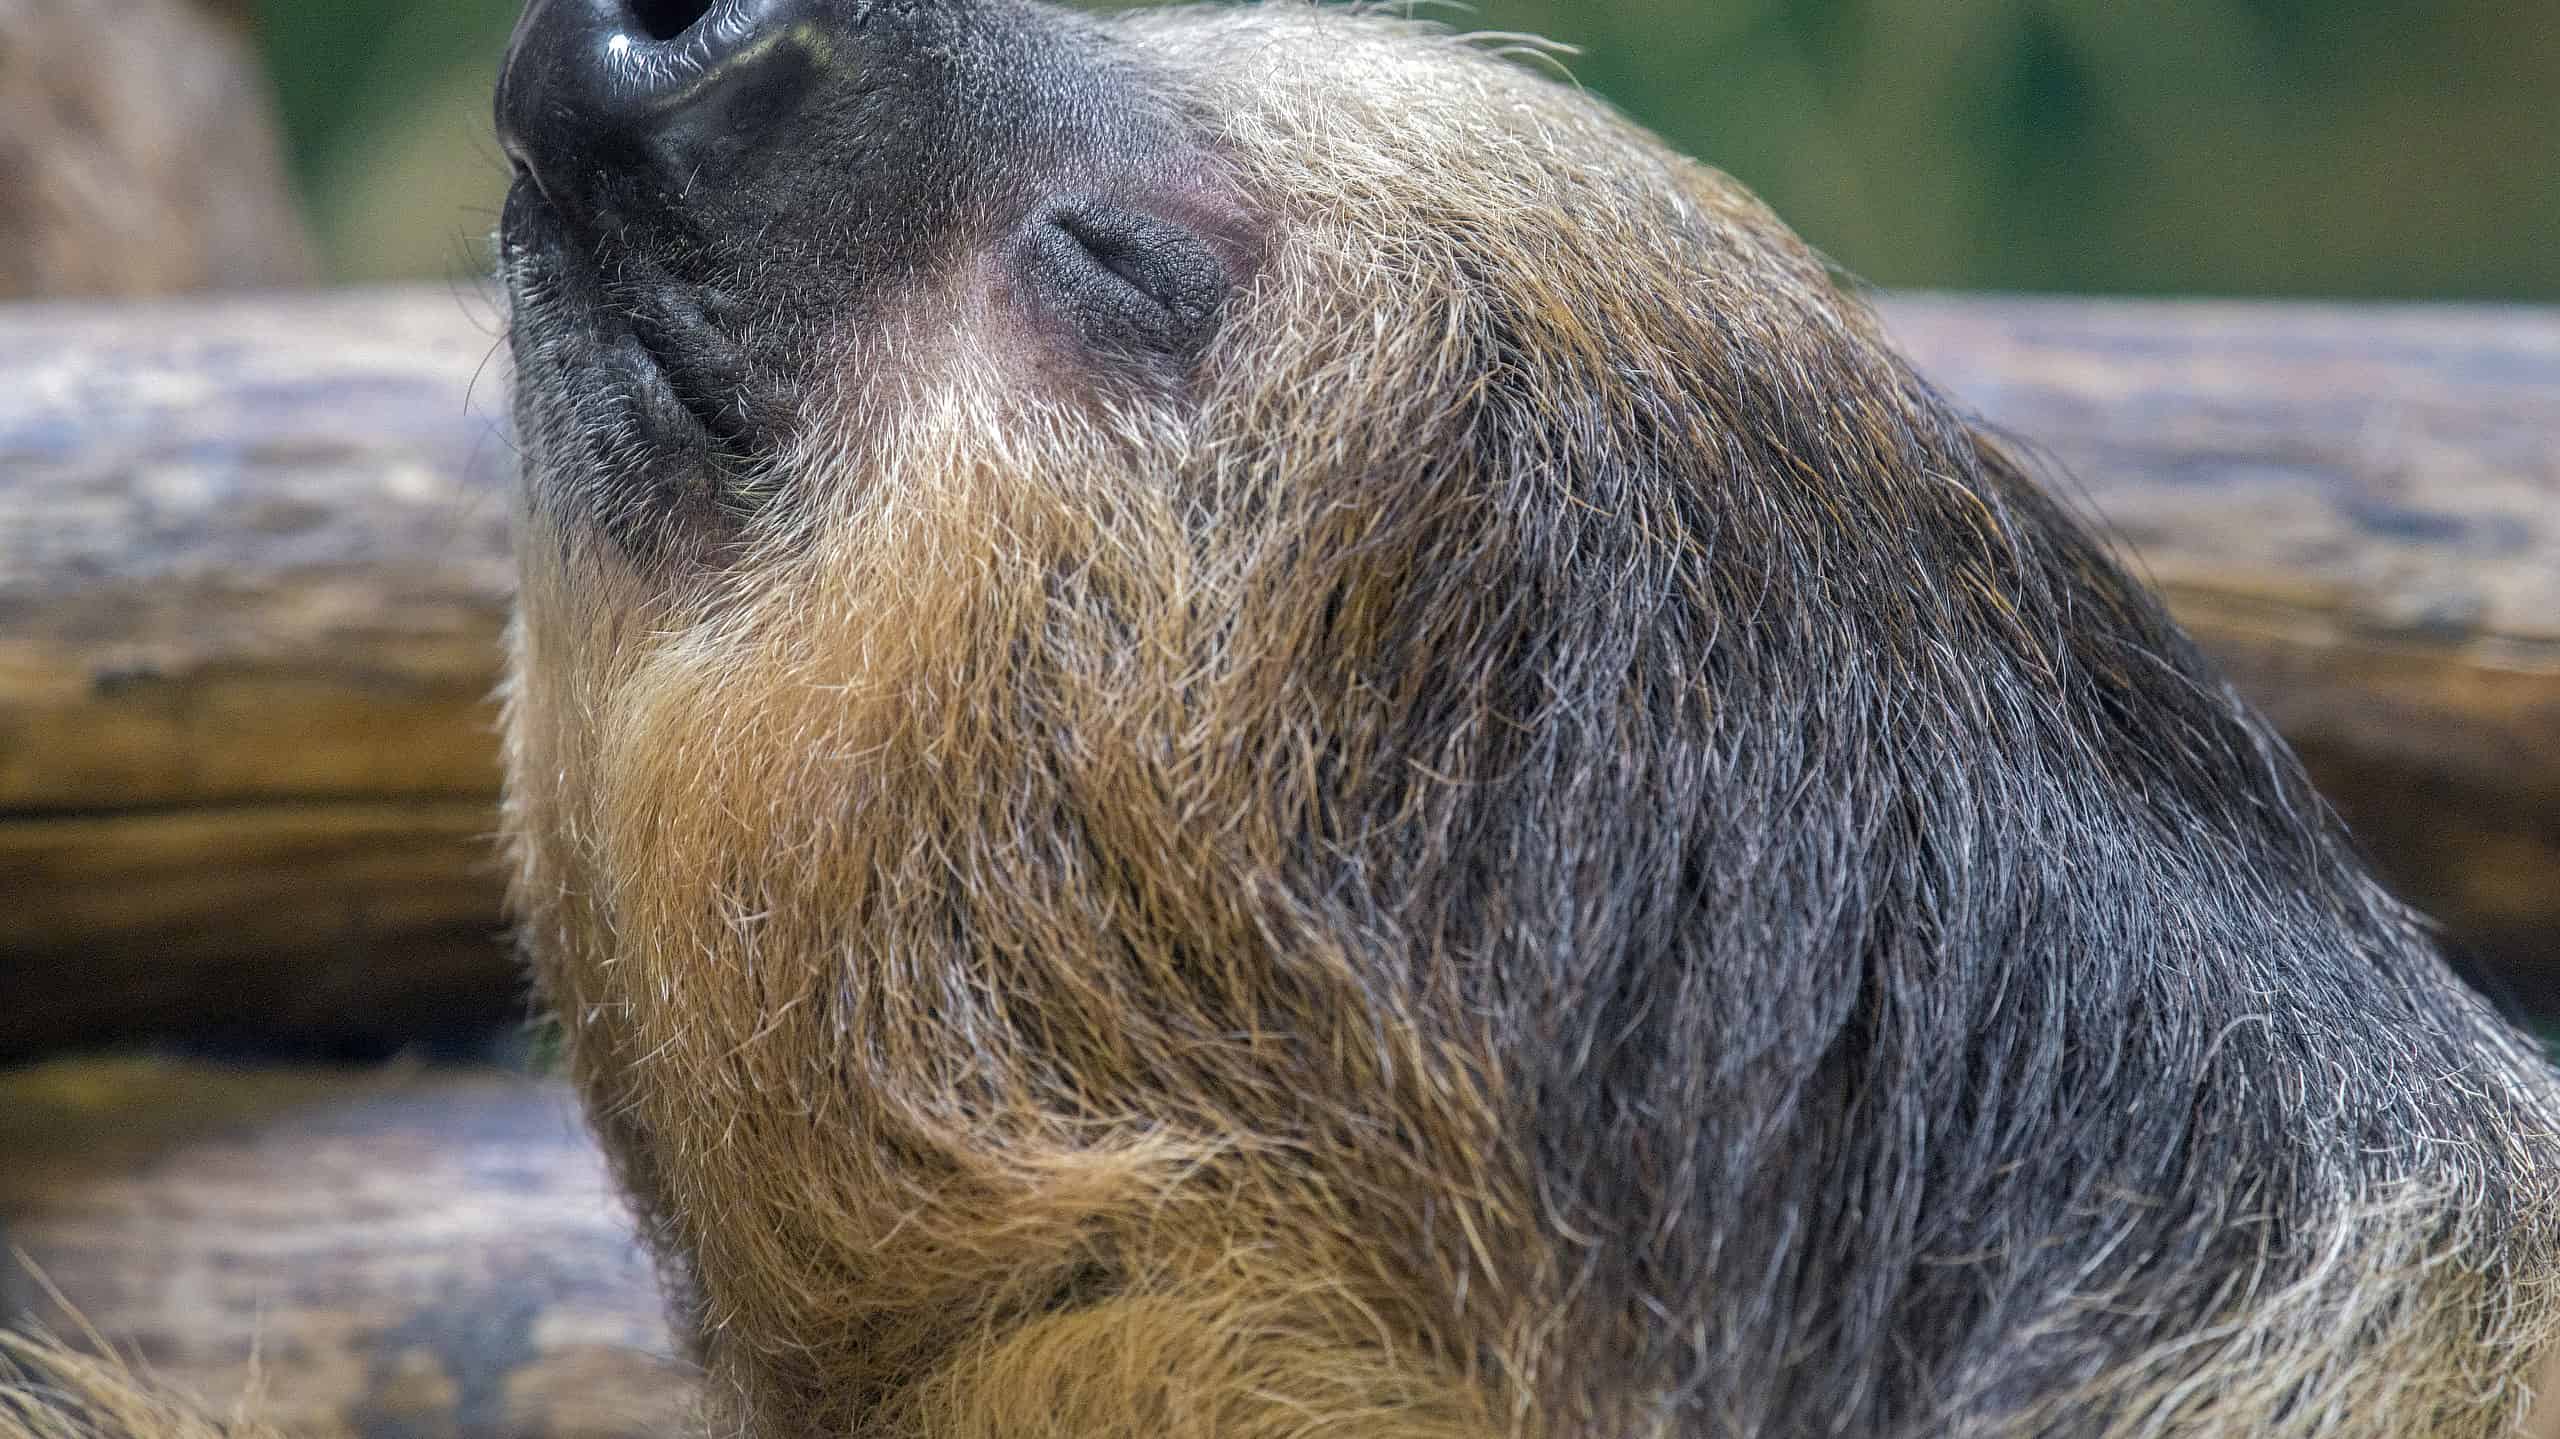 Explore These 20 Amazing Zoos with Sloths - AZ Animals